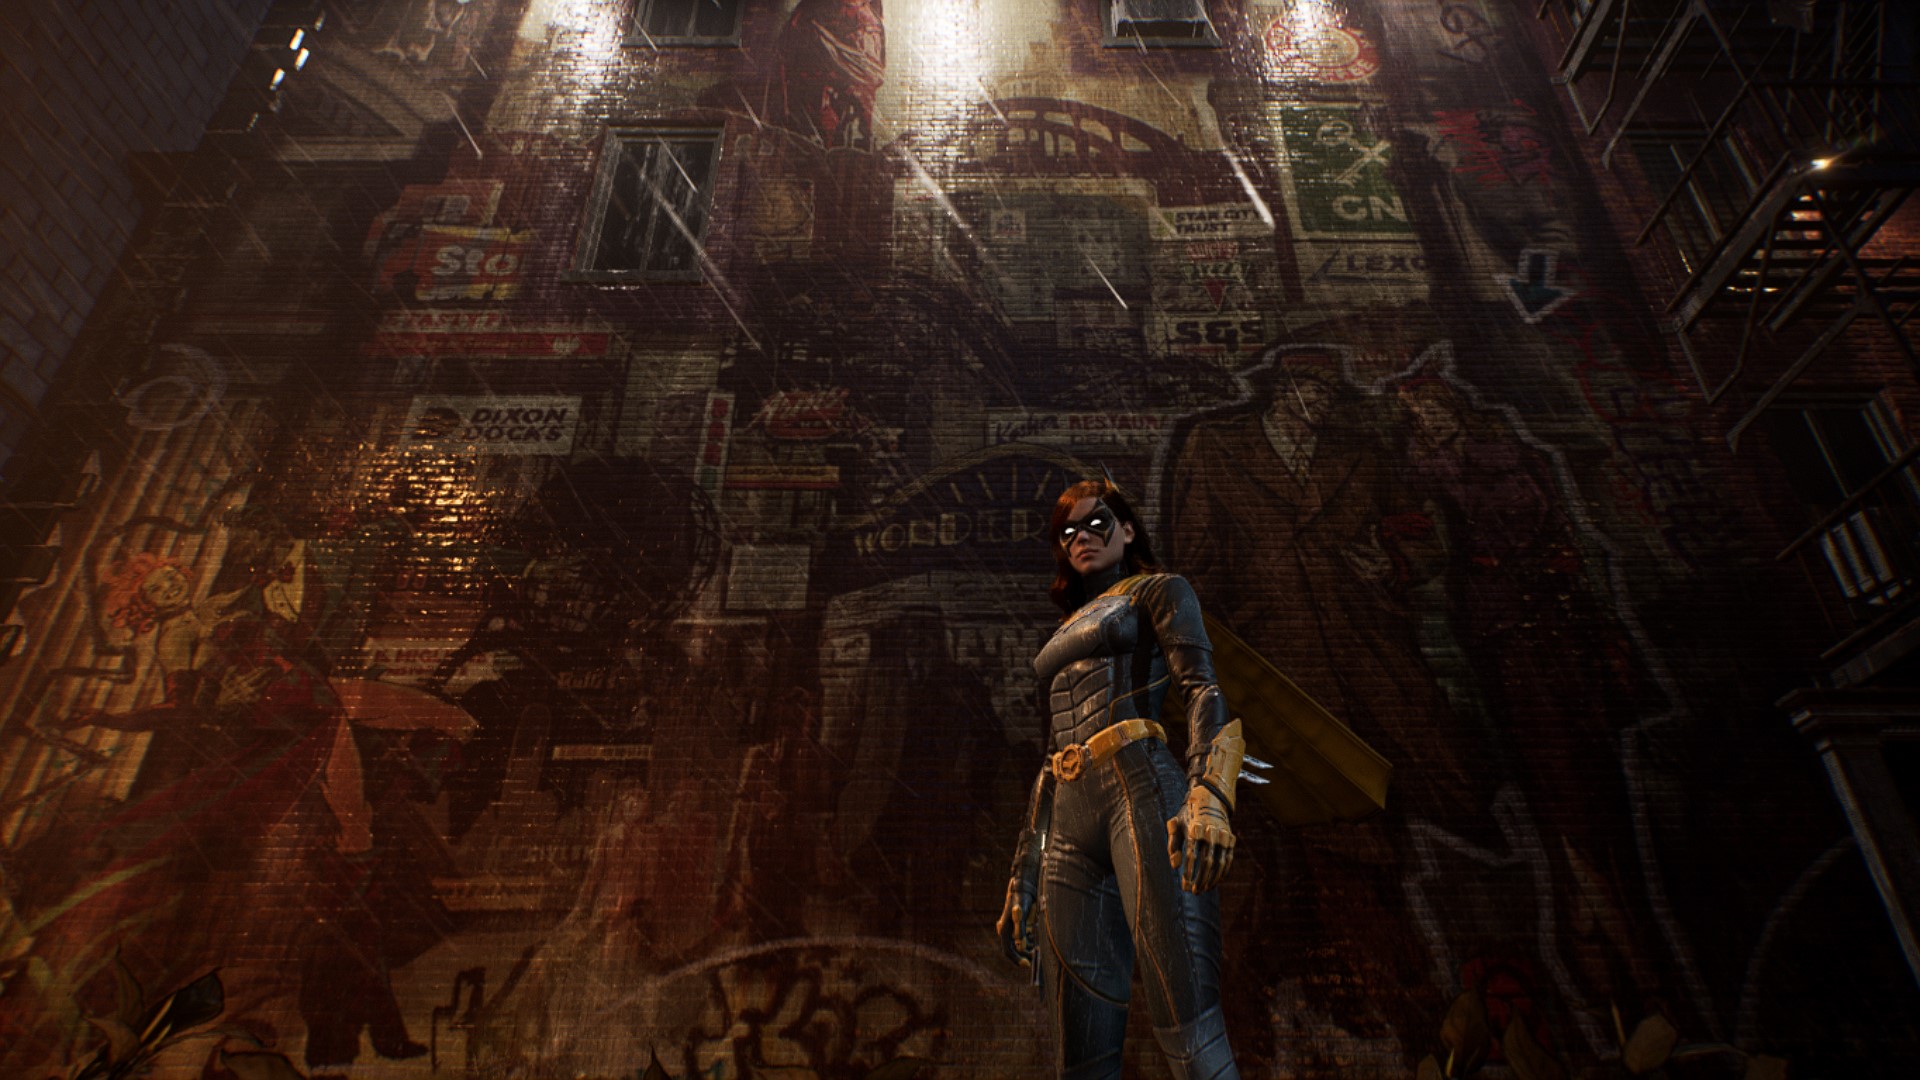 Gotham Knights graffiti - Simpler Times mural